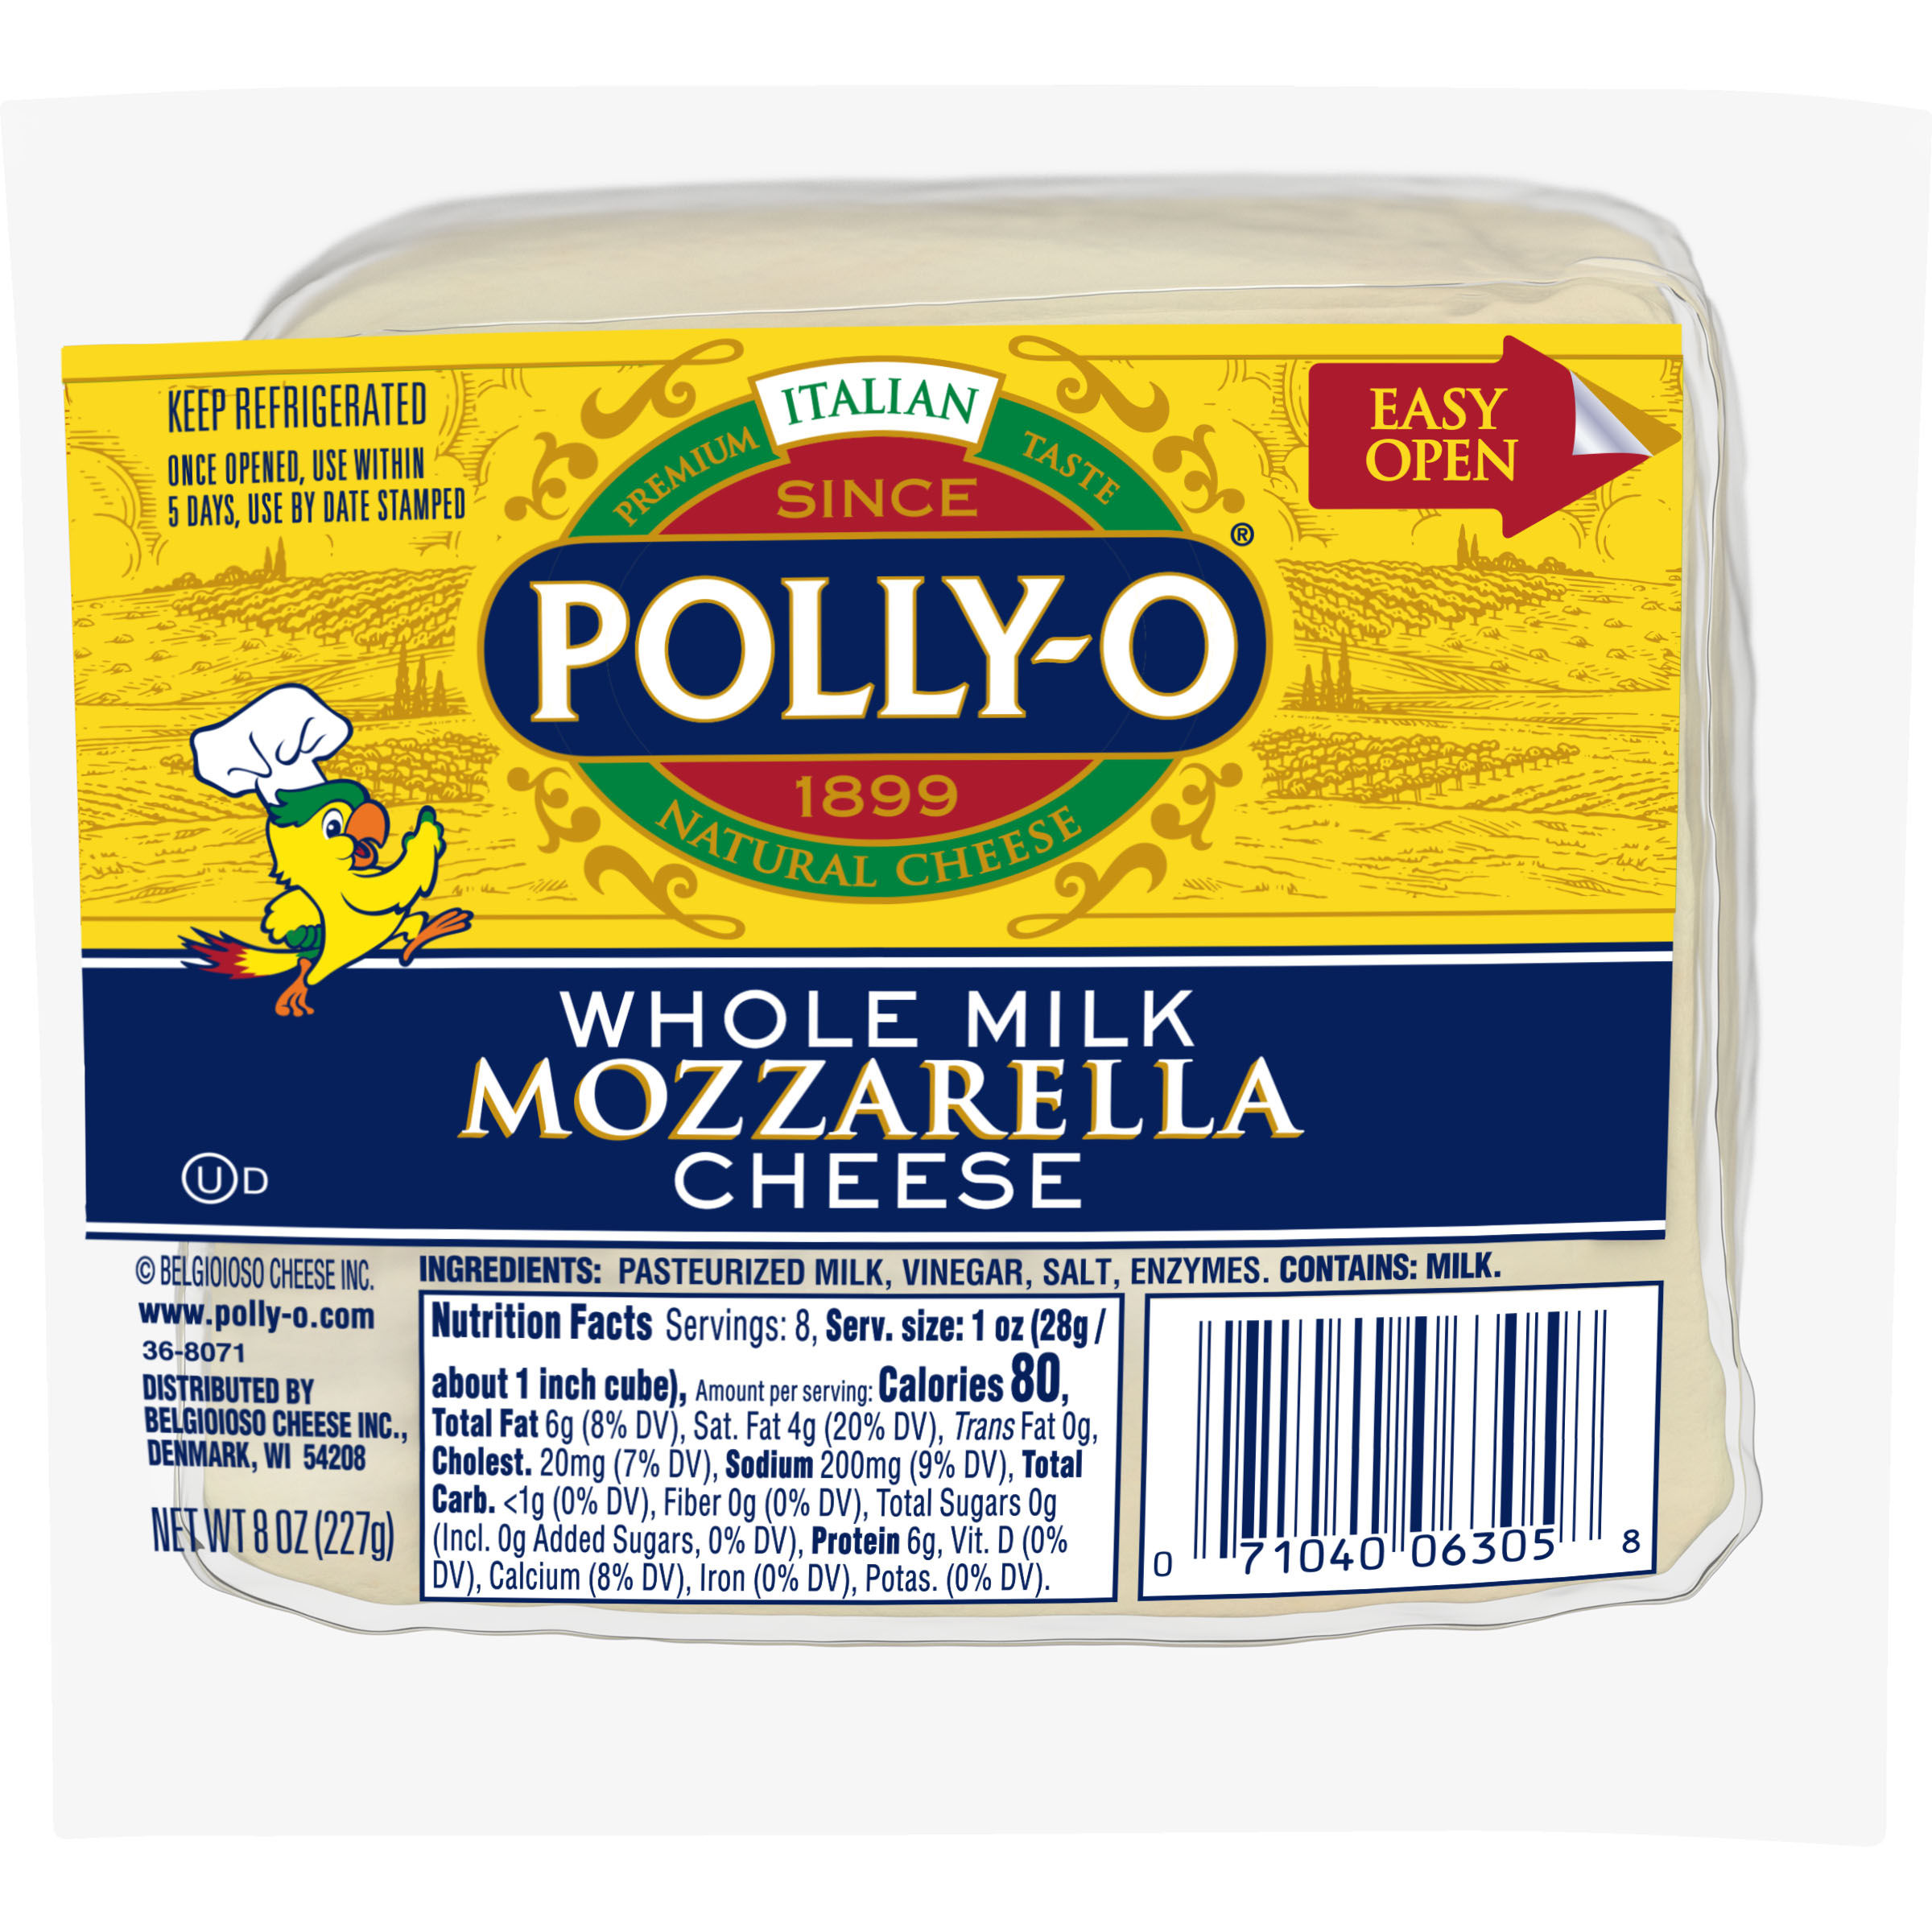 Low Moisture Whole Milk Mozzarella ⓊD, 8 oz. Chunk